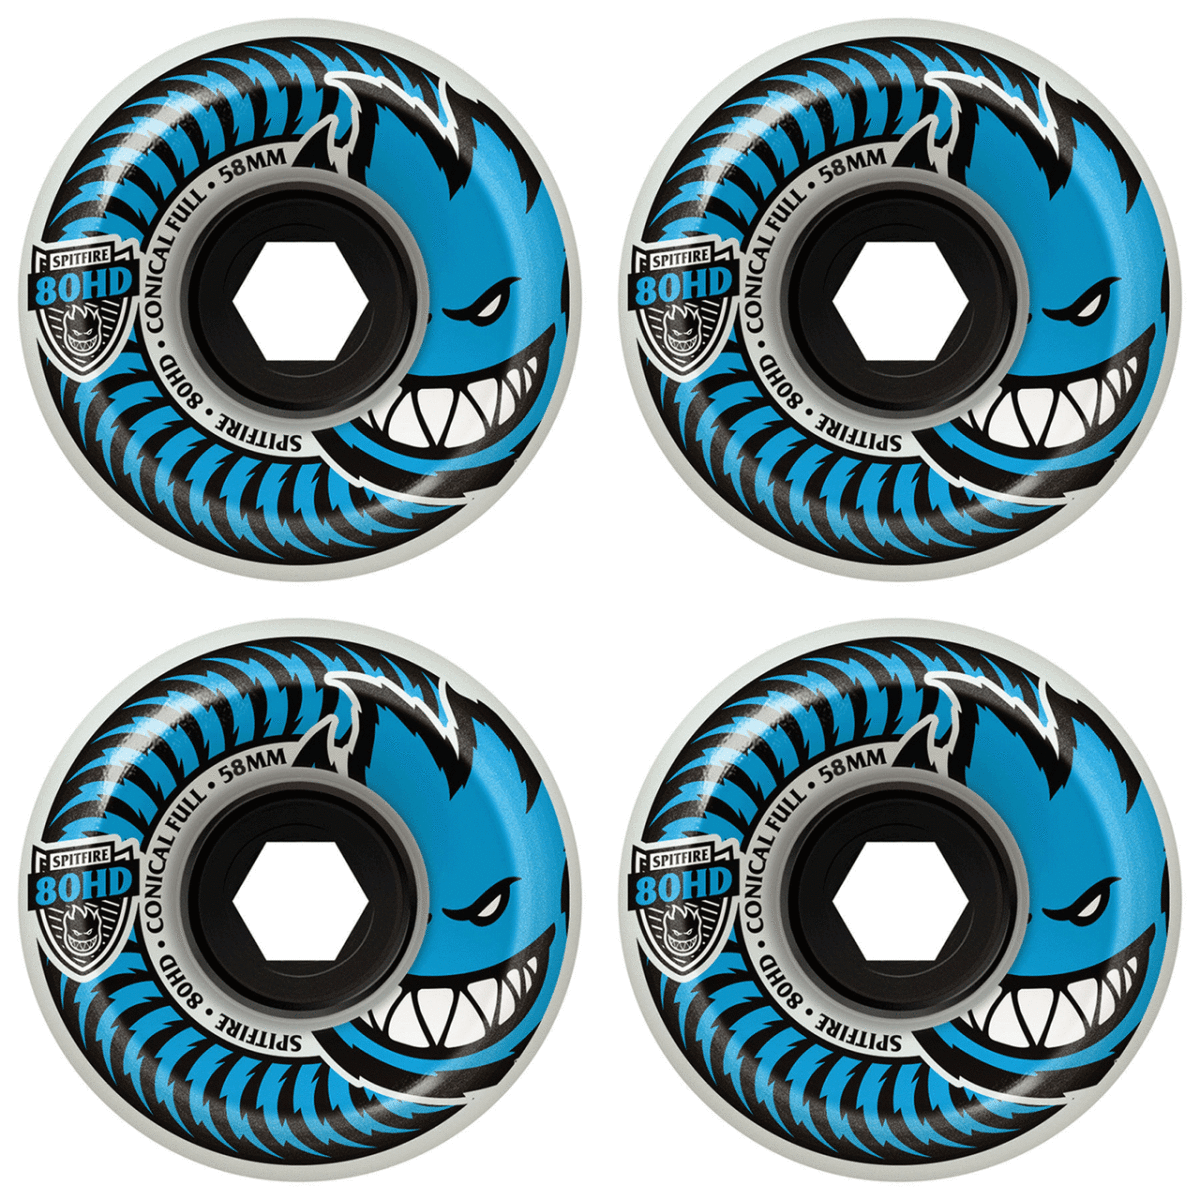 SF 80HD Conical Full 56mm (Blue) - Skateboard - Wheels